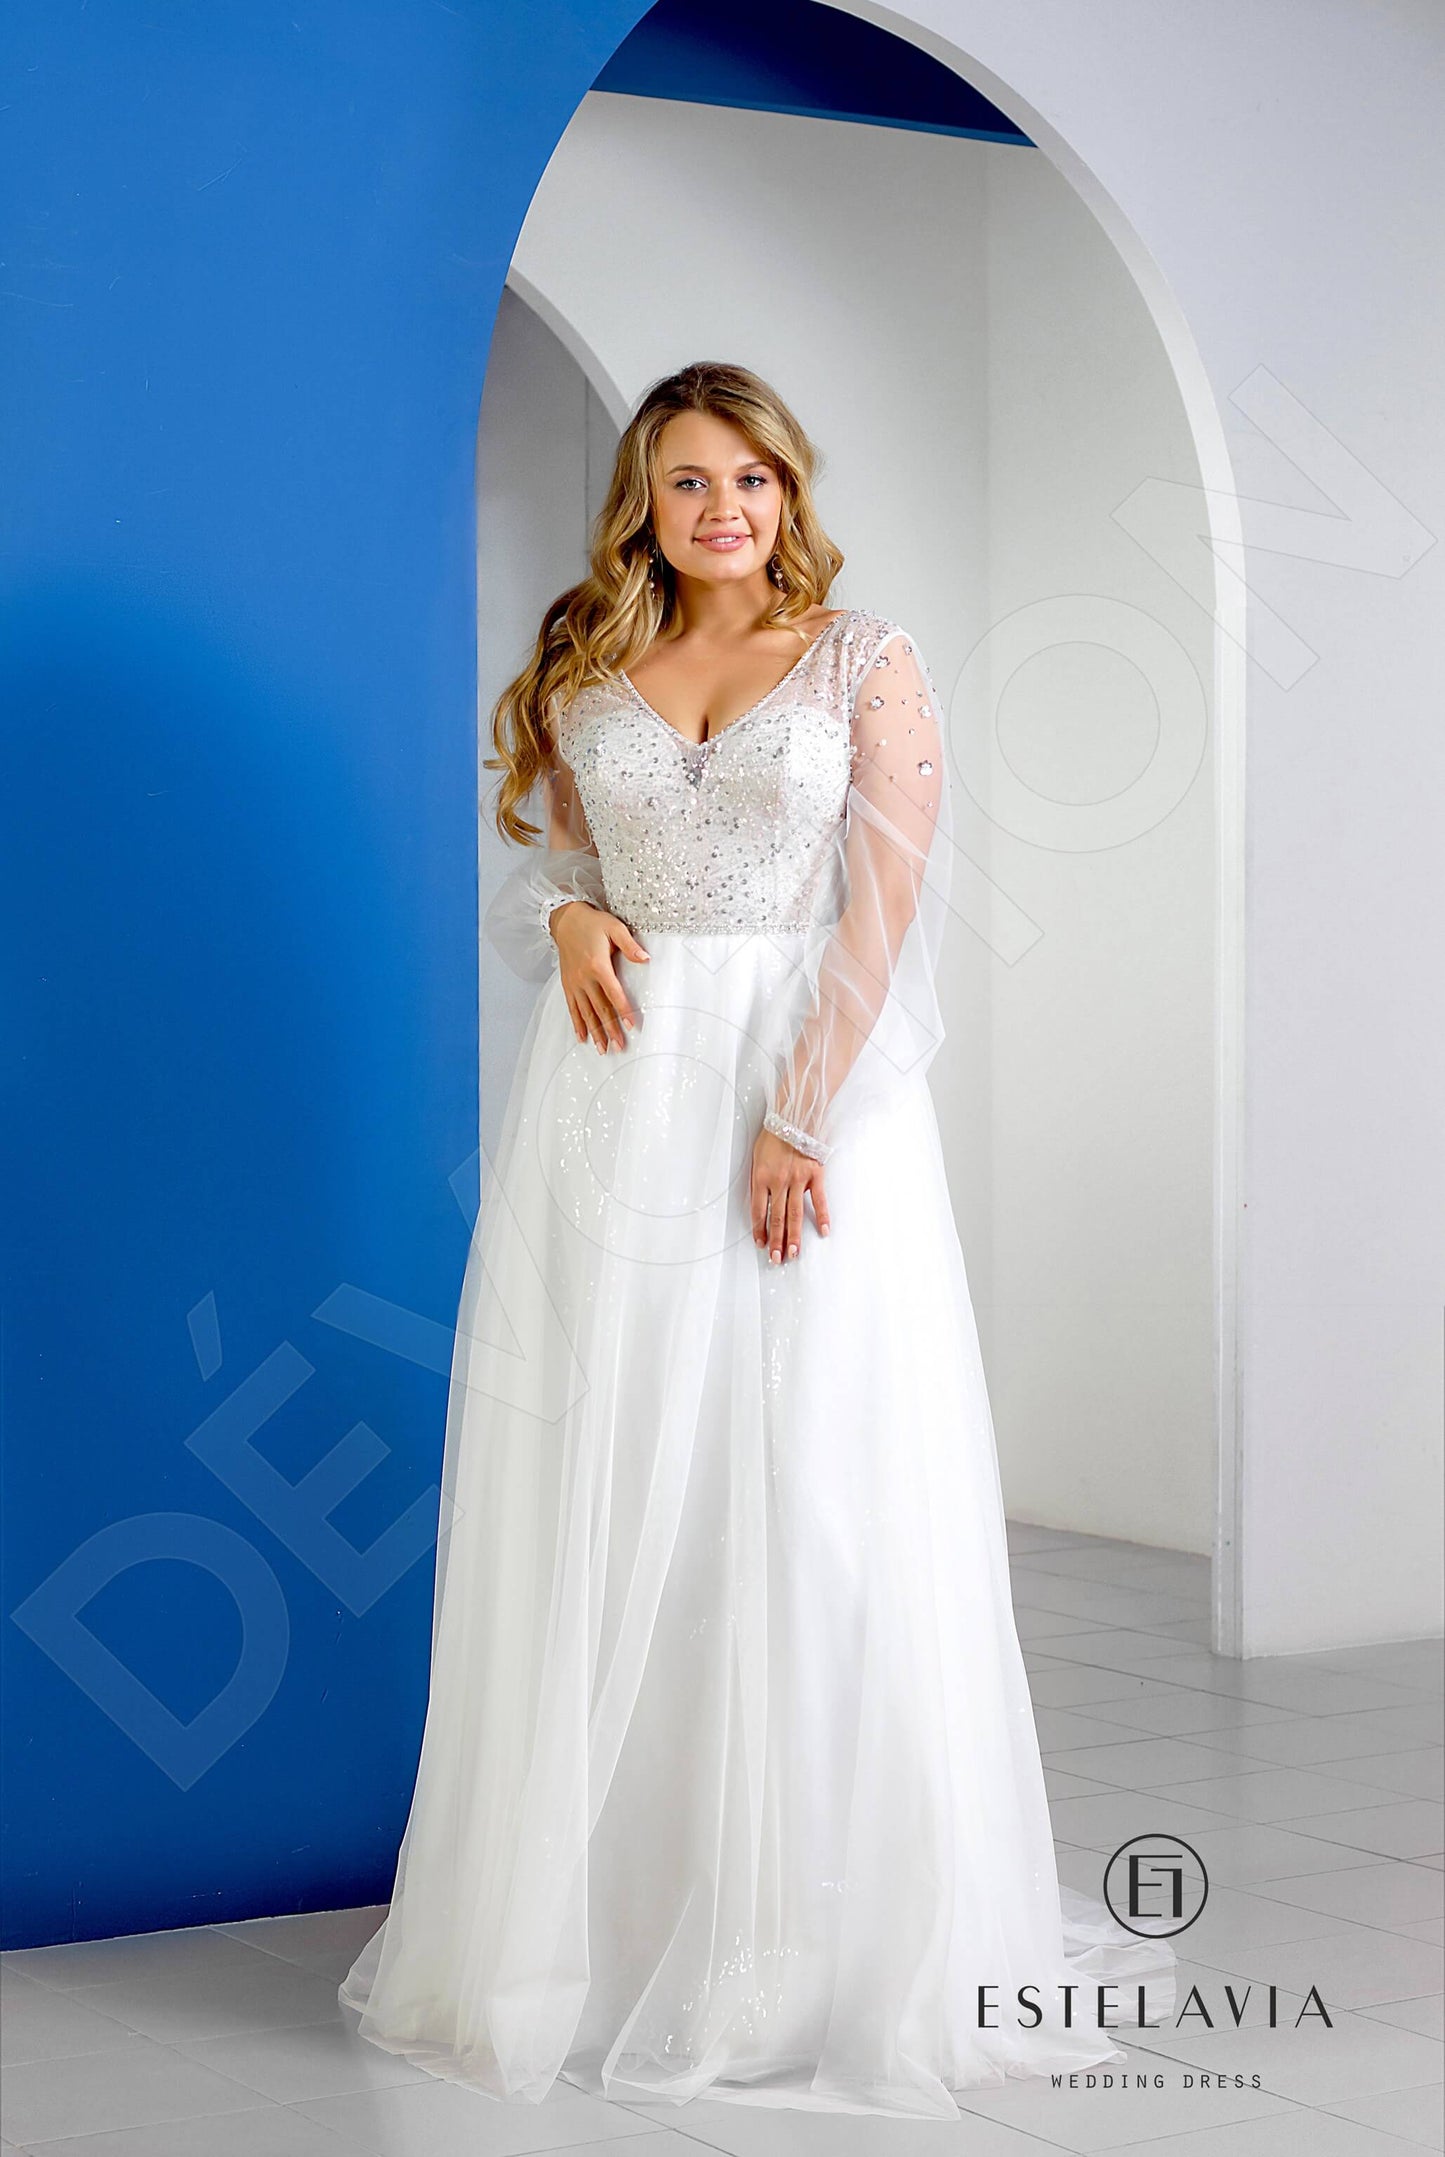 Rogneda Open back A-line Long sleeve Wedding Dress 6